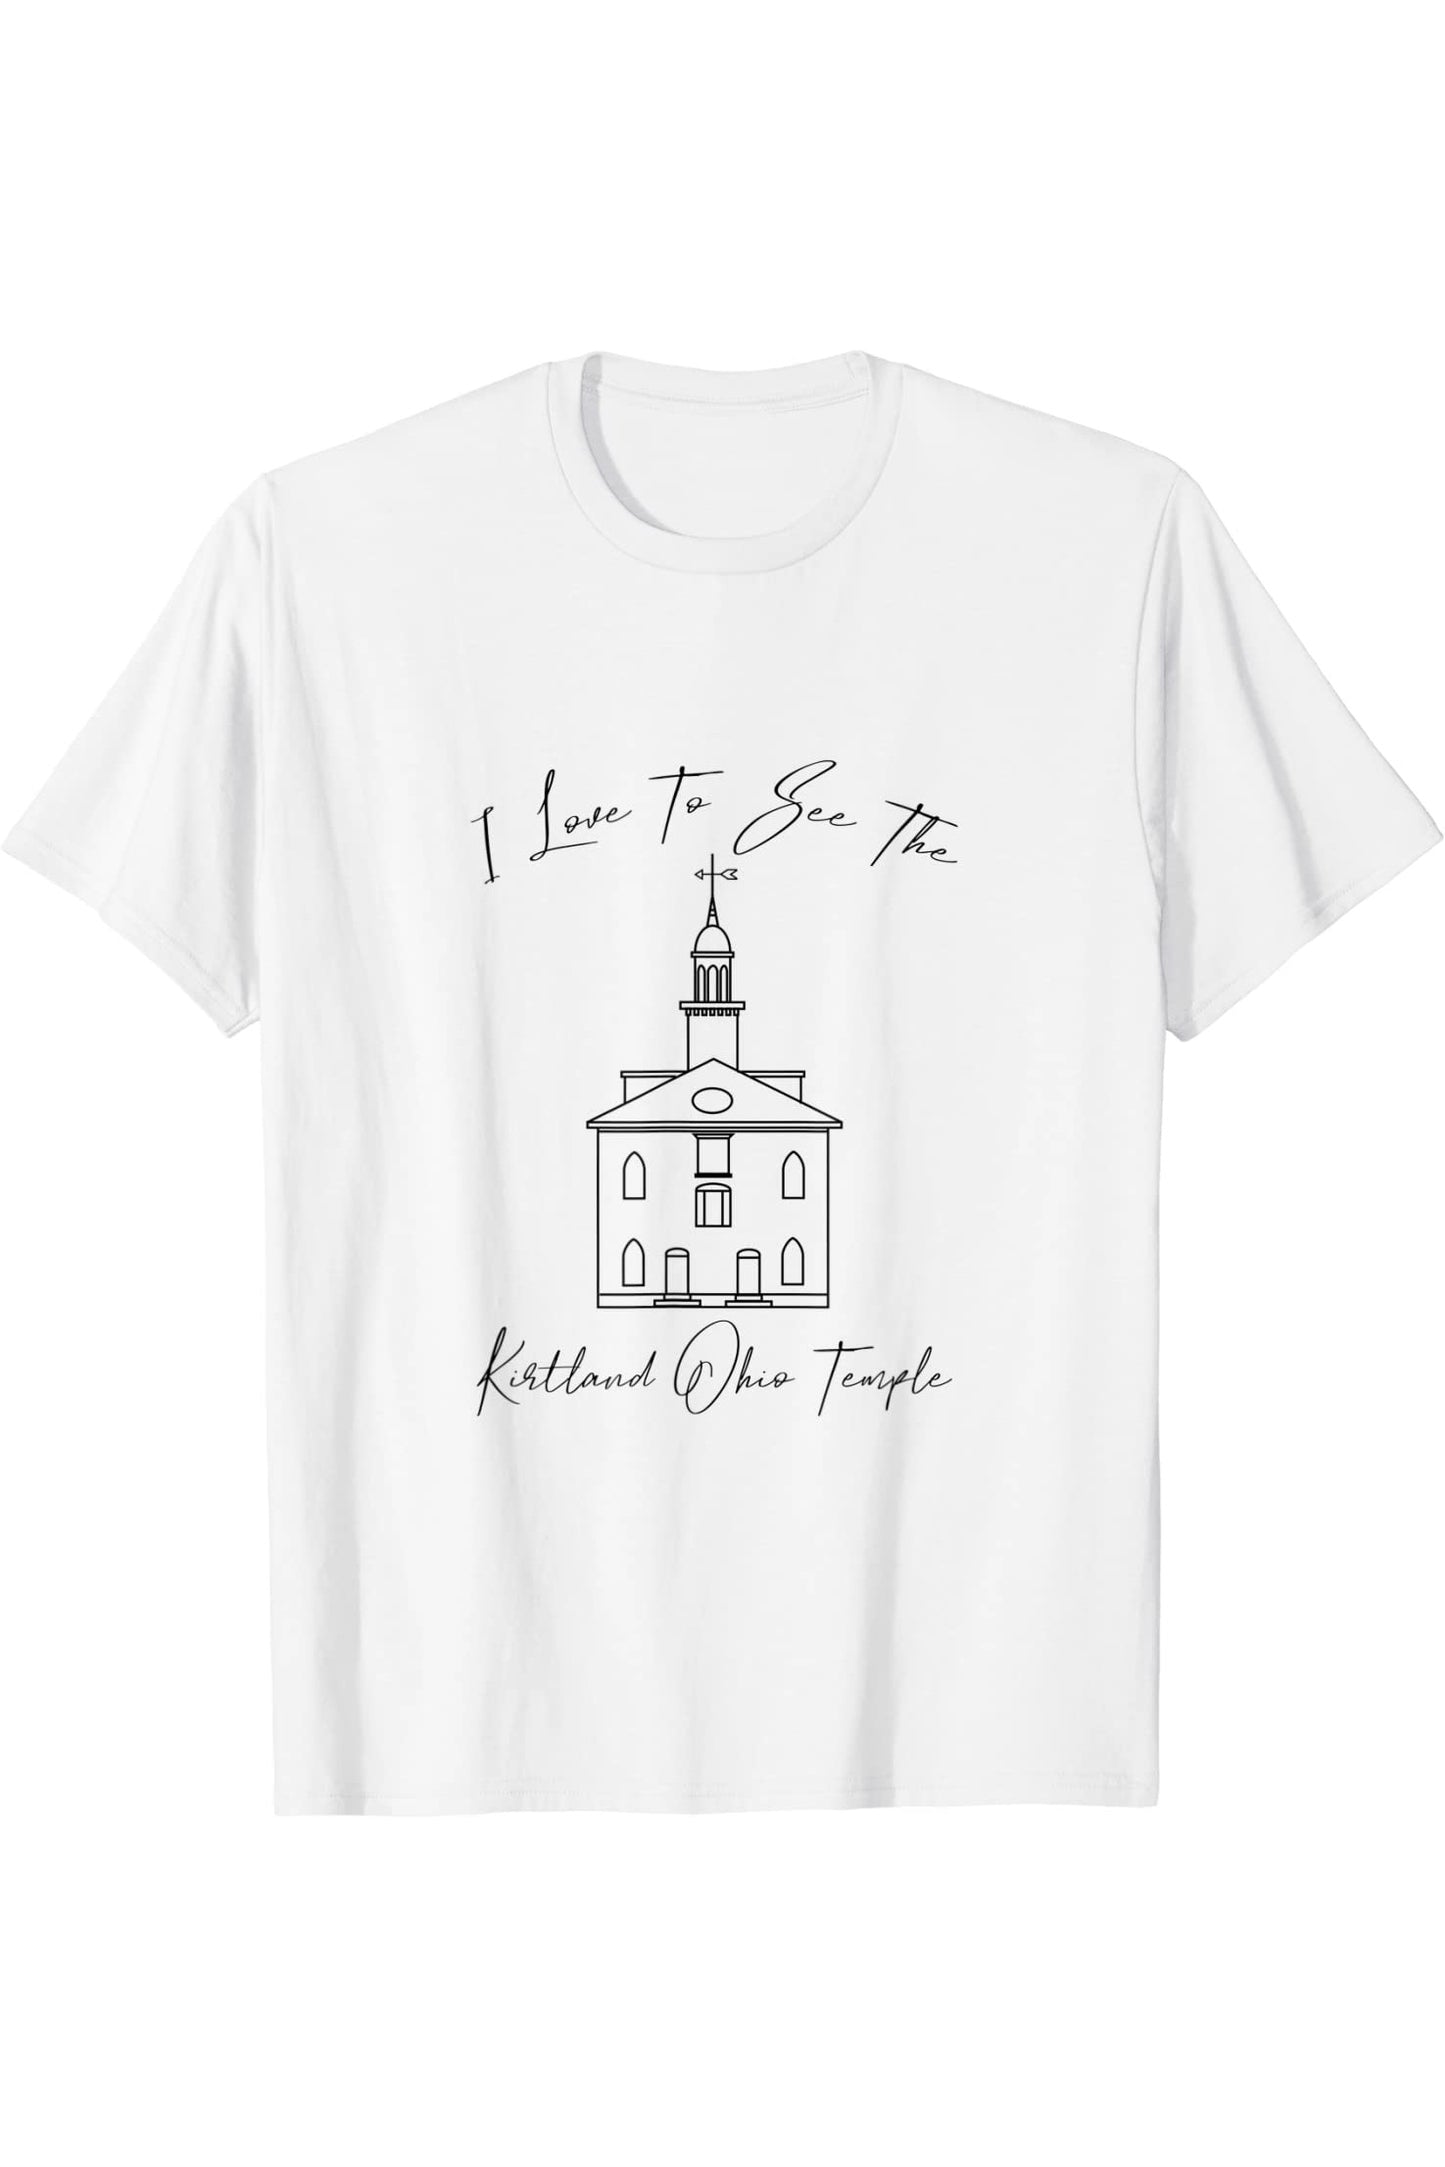 Kirtland Ohio Temple T-Shirt - Calligraphy Style (English) US